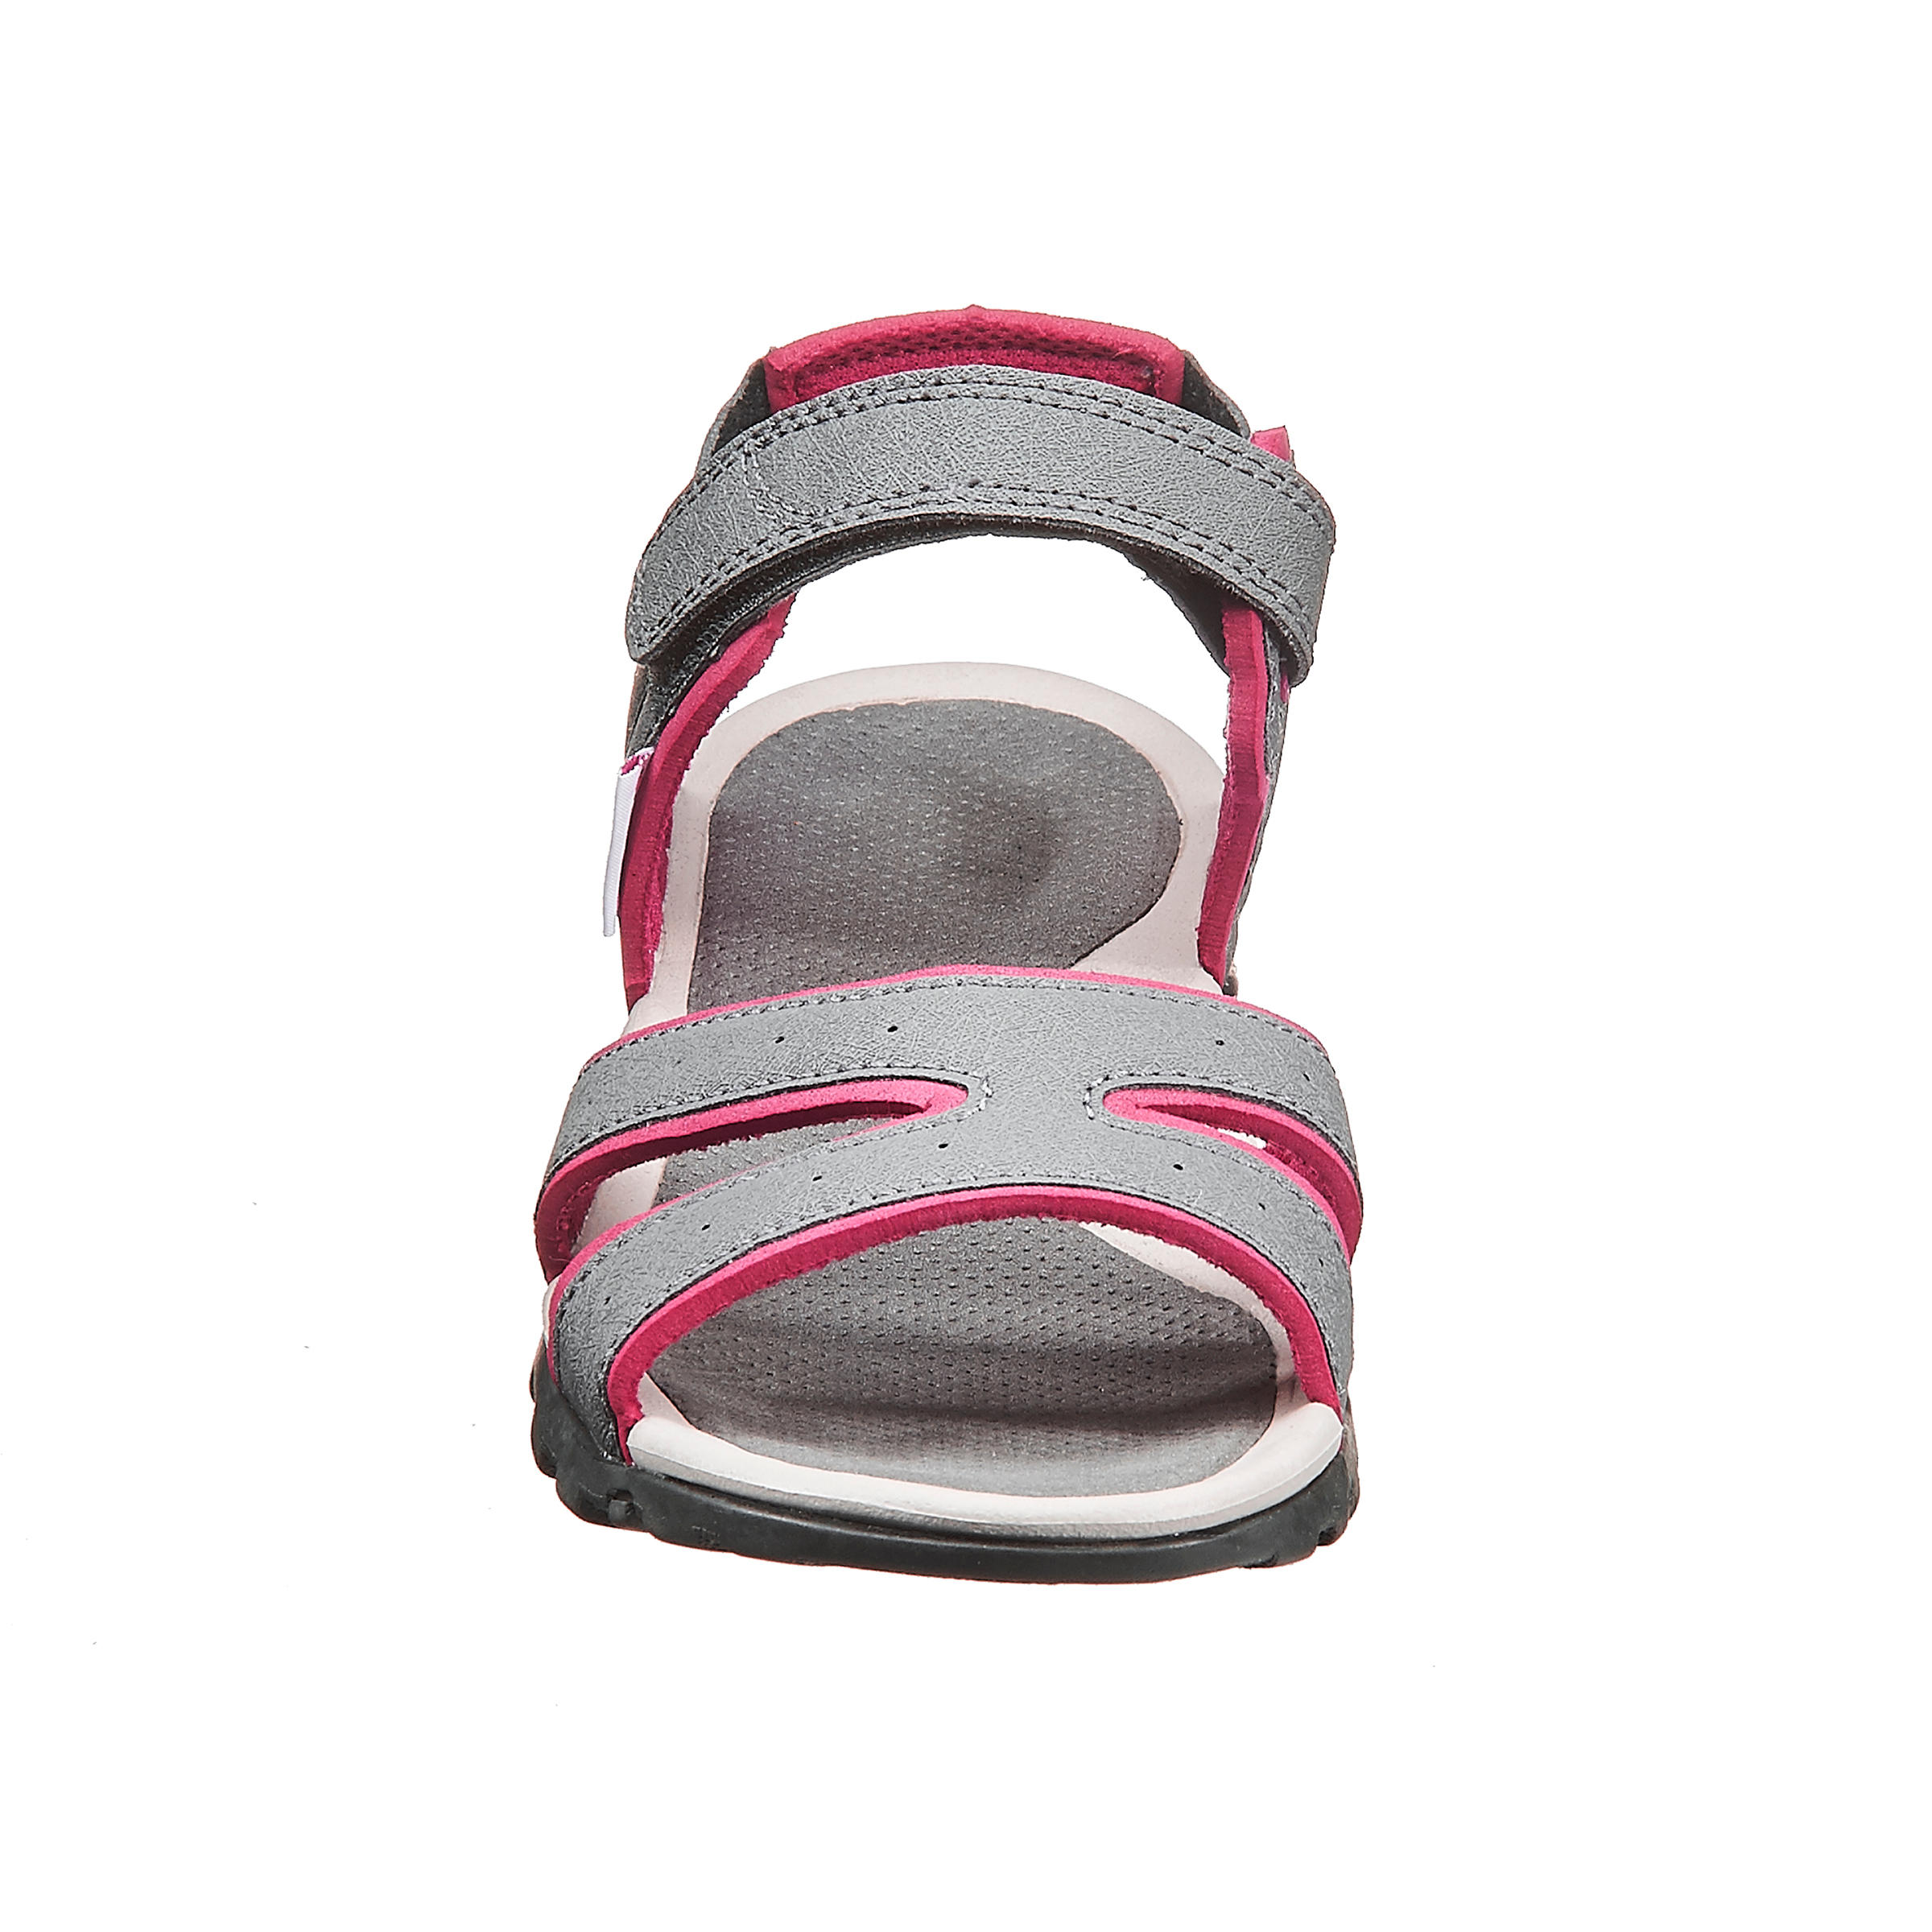 decathlon women's sandals